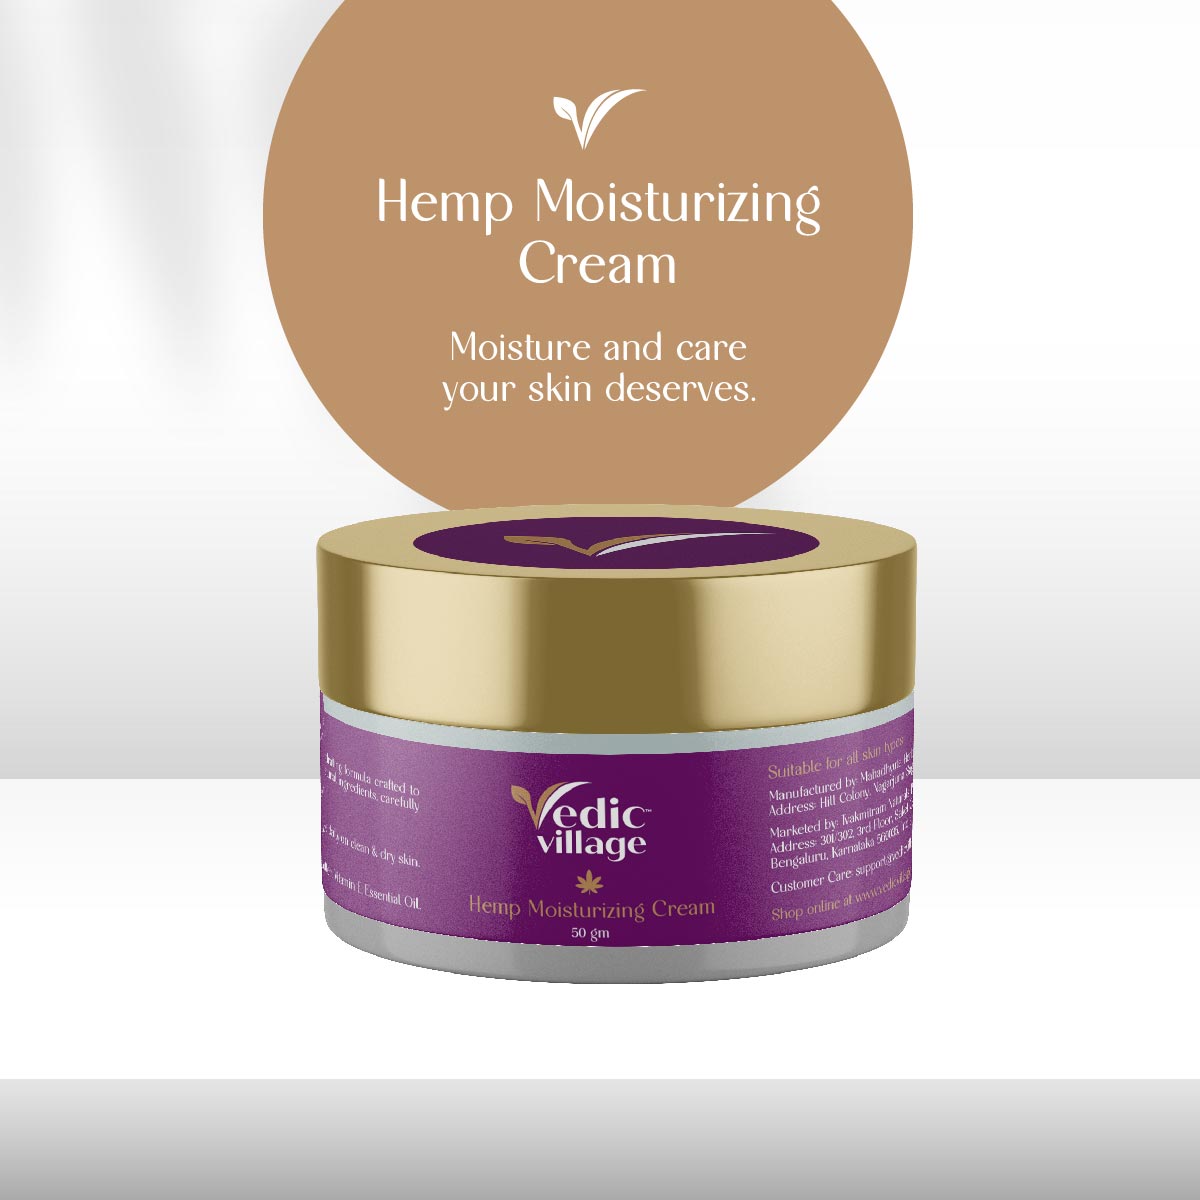 Hemp Moisturizing Cream | 50 gm